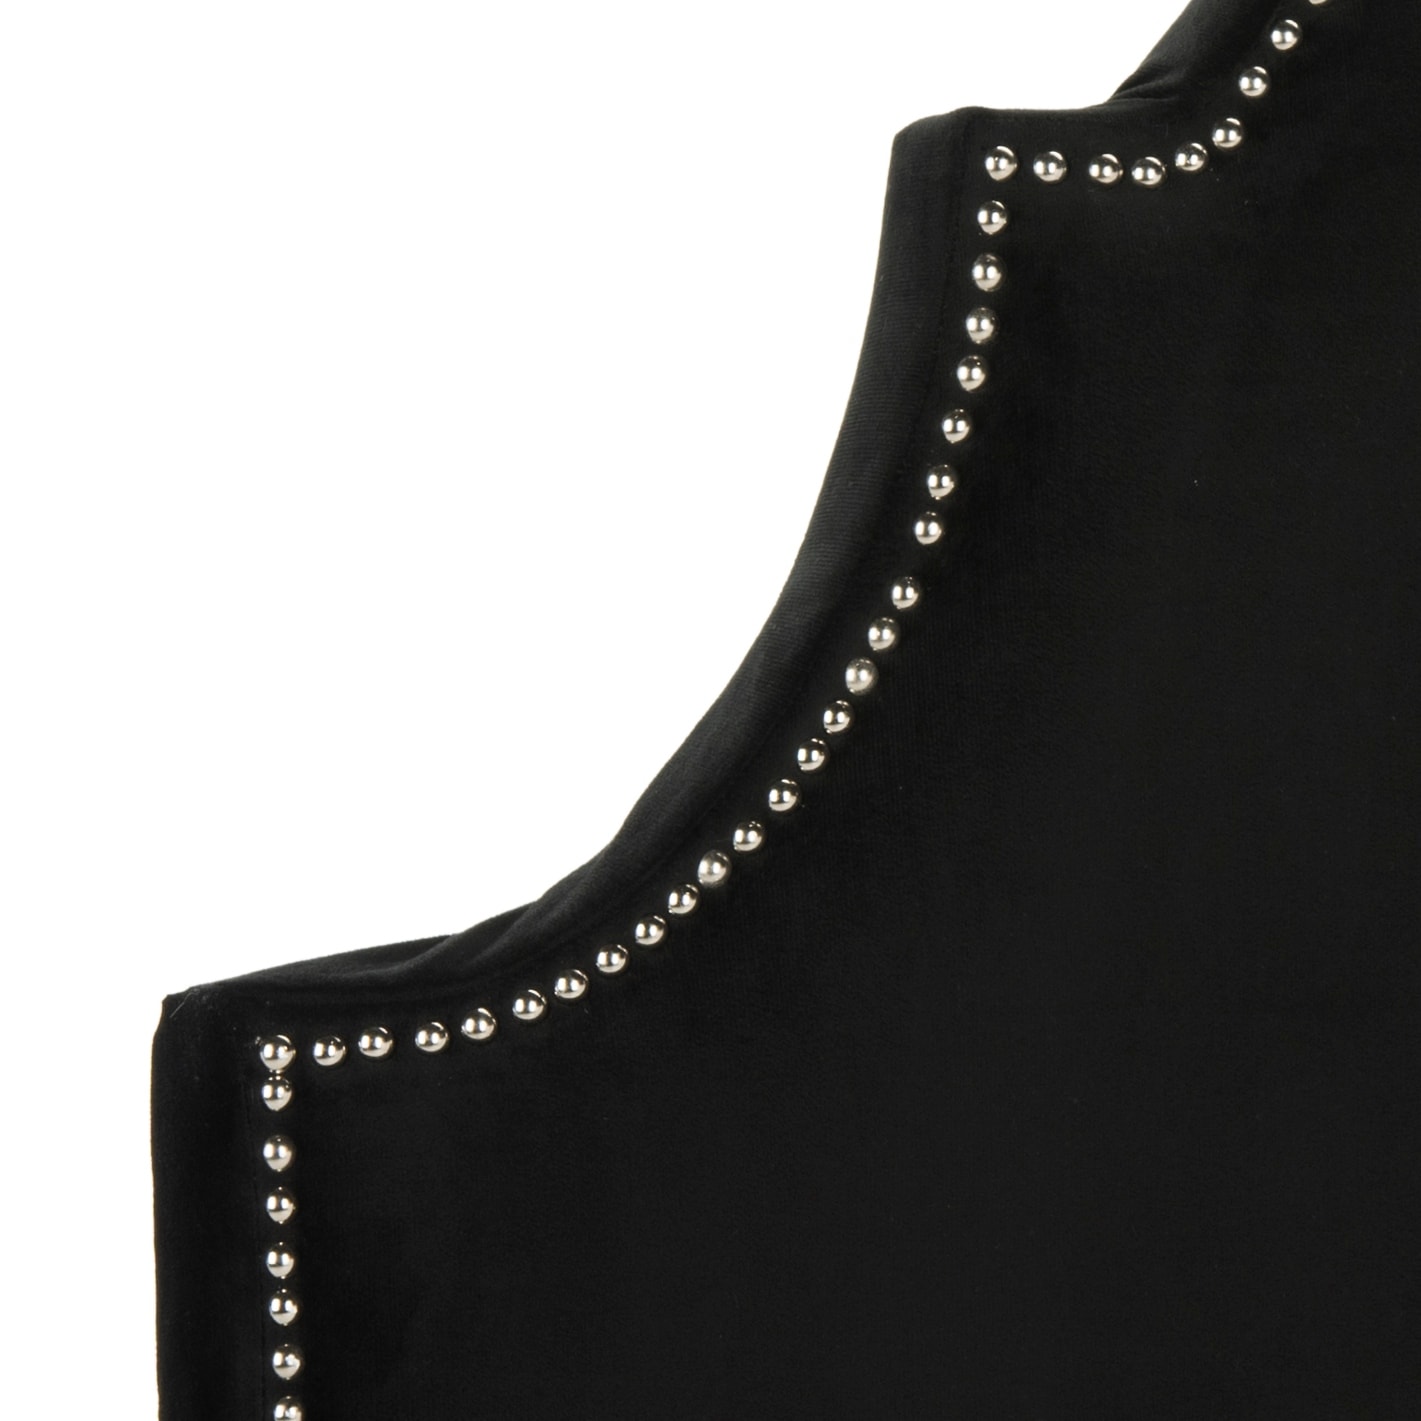 SAFAVIEH Hallmar Black Velvet Upholstered Arched Headboard - Silver Nailhead (Twin)